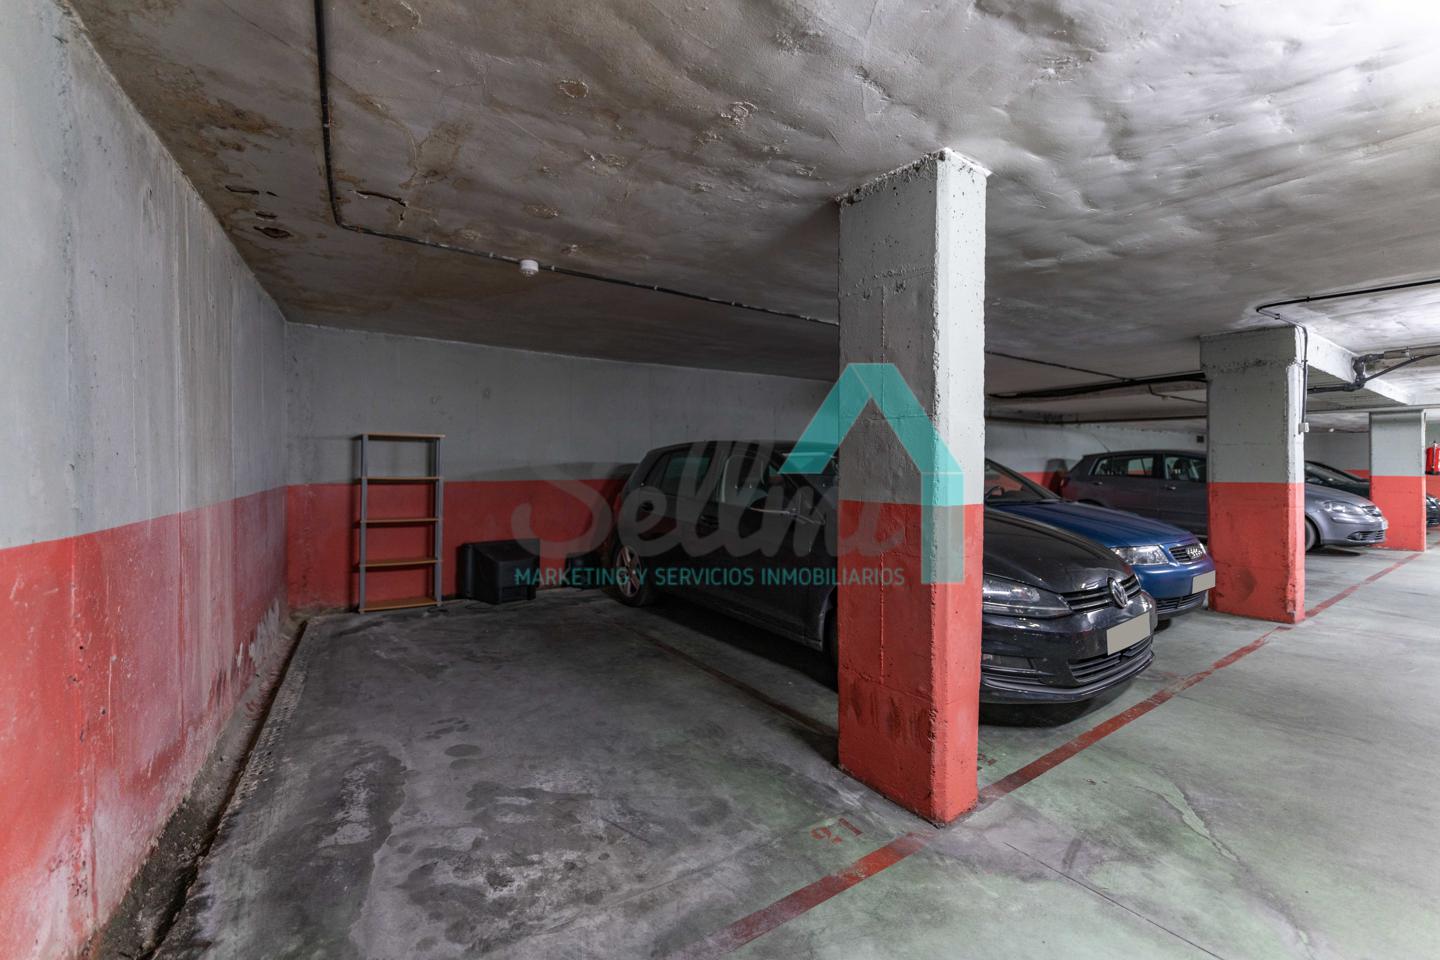 Alquiler Plaza De Garage Plaza De Parking en alquiler en Oviedo de 21m2 REF:17175 – Sellmi  Inmobiliaria en Asturias